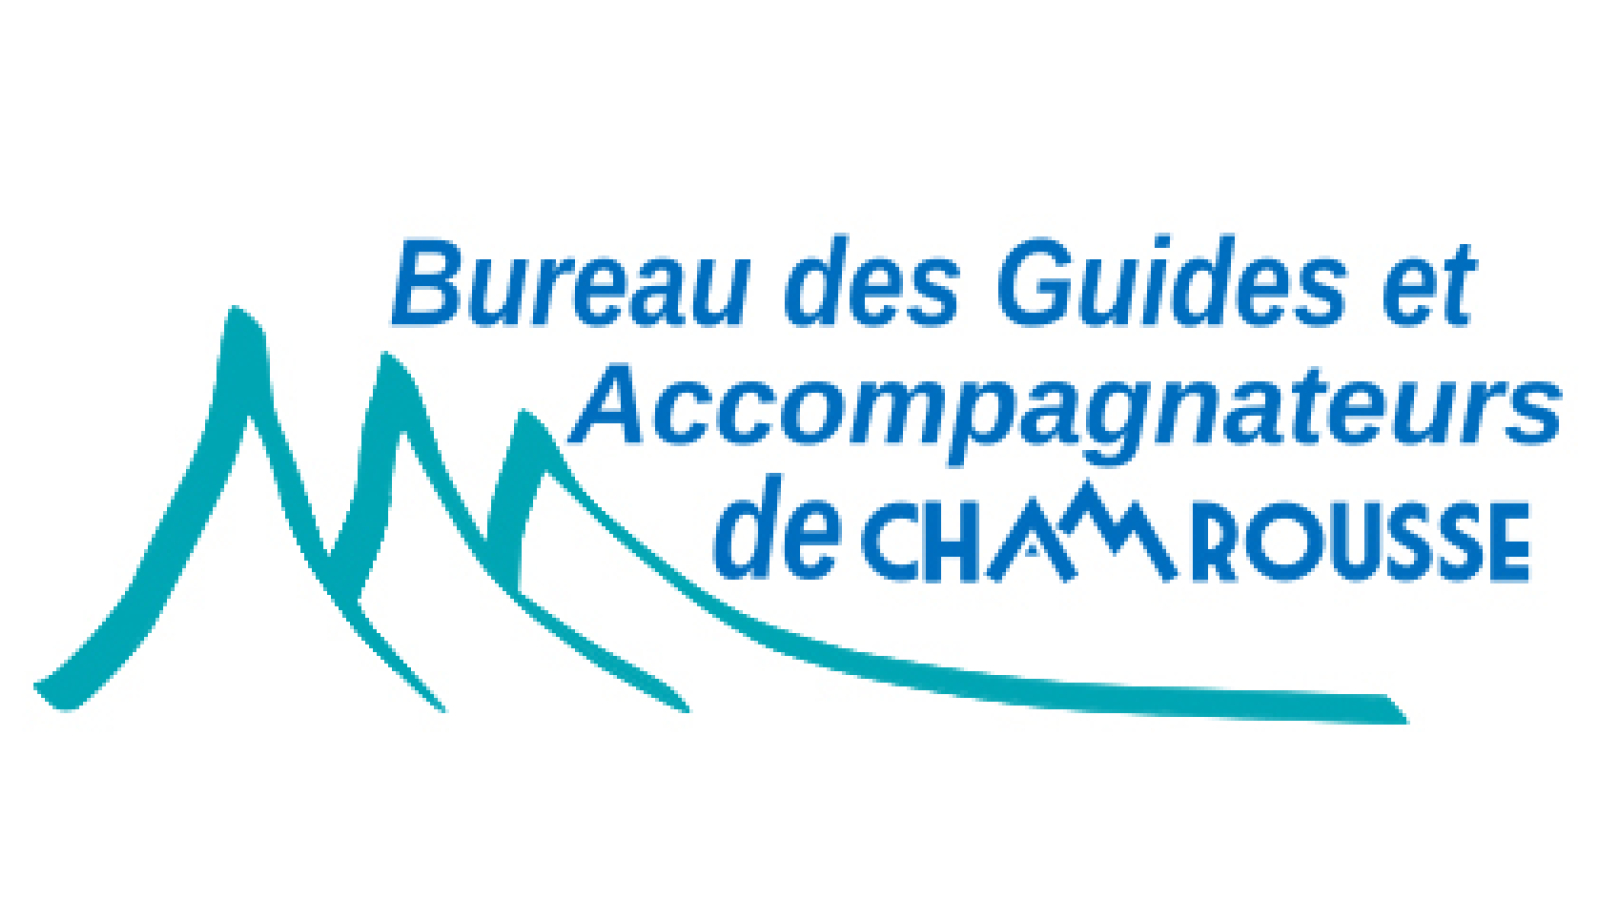 Mountain guides logo